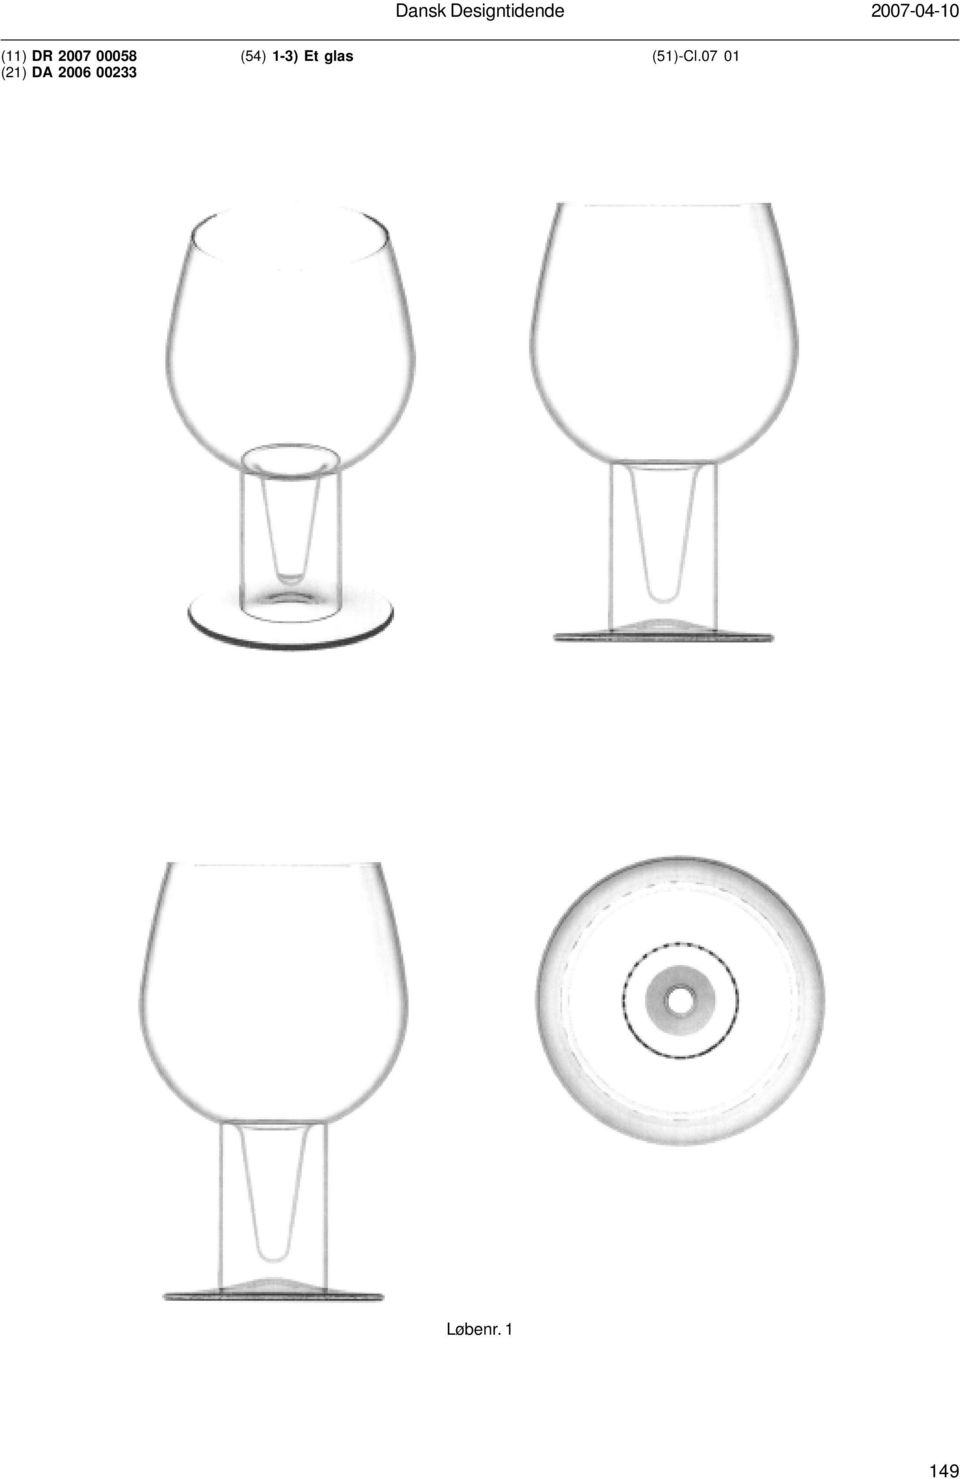 00058 (54) 1-3) Et glas